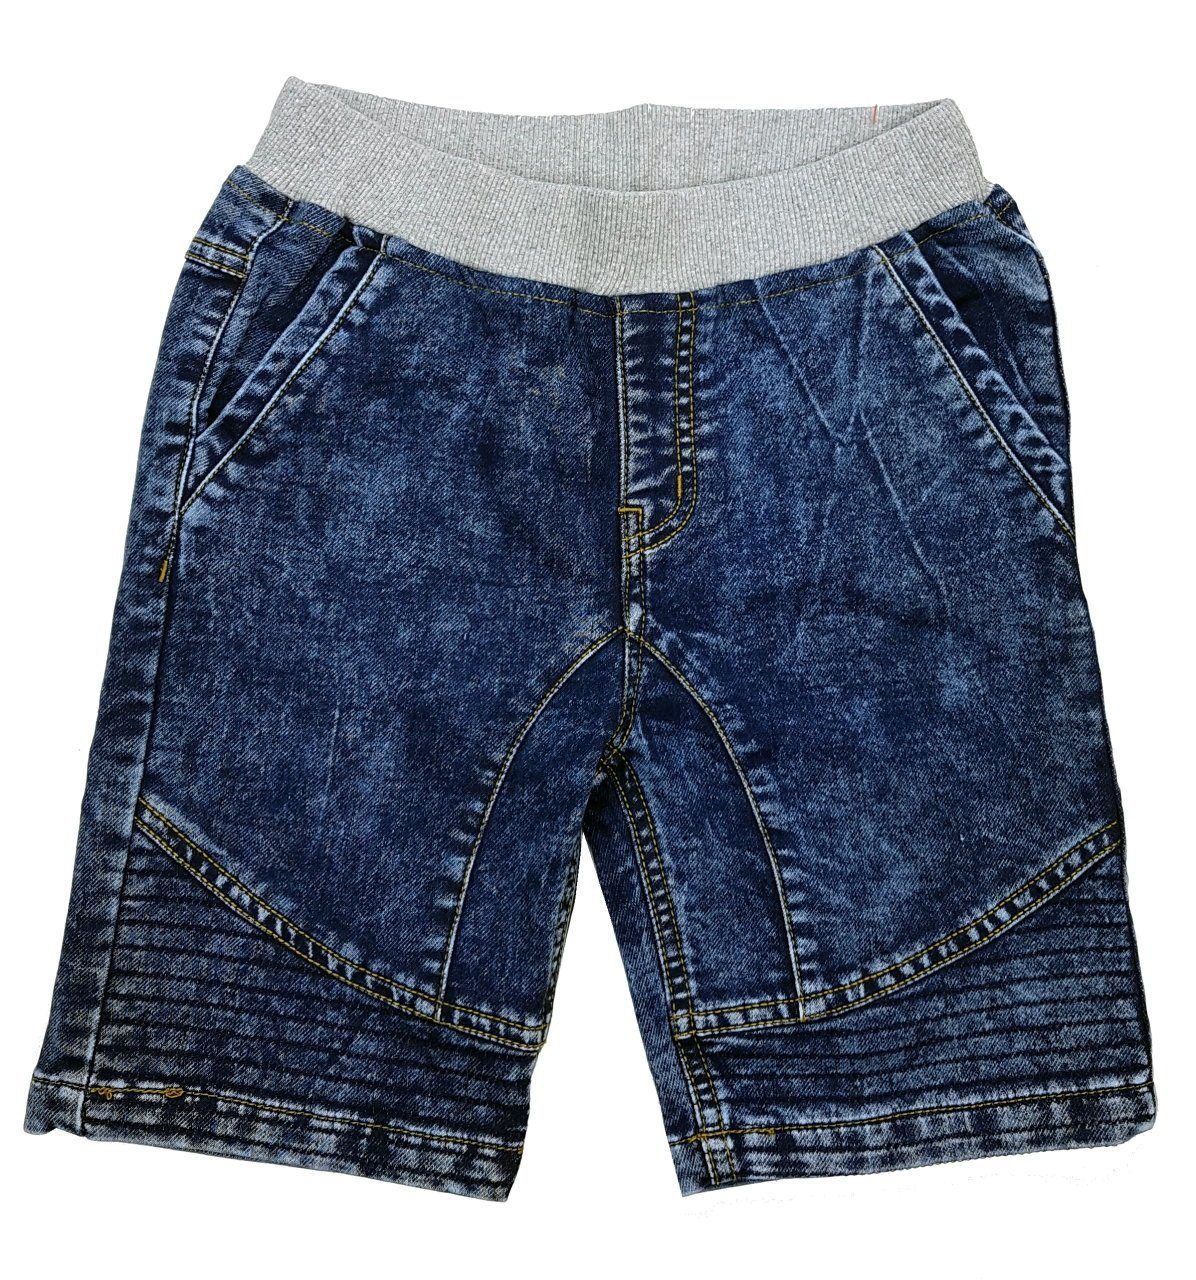 Fashion Boy Jogg-Jeansbermudas Stretch Bermuda Jeans Hose, Sommerhose, Jn206